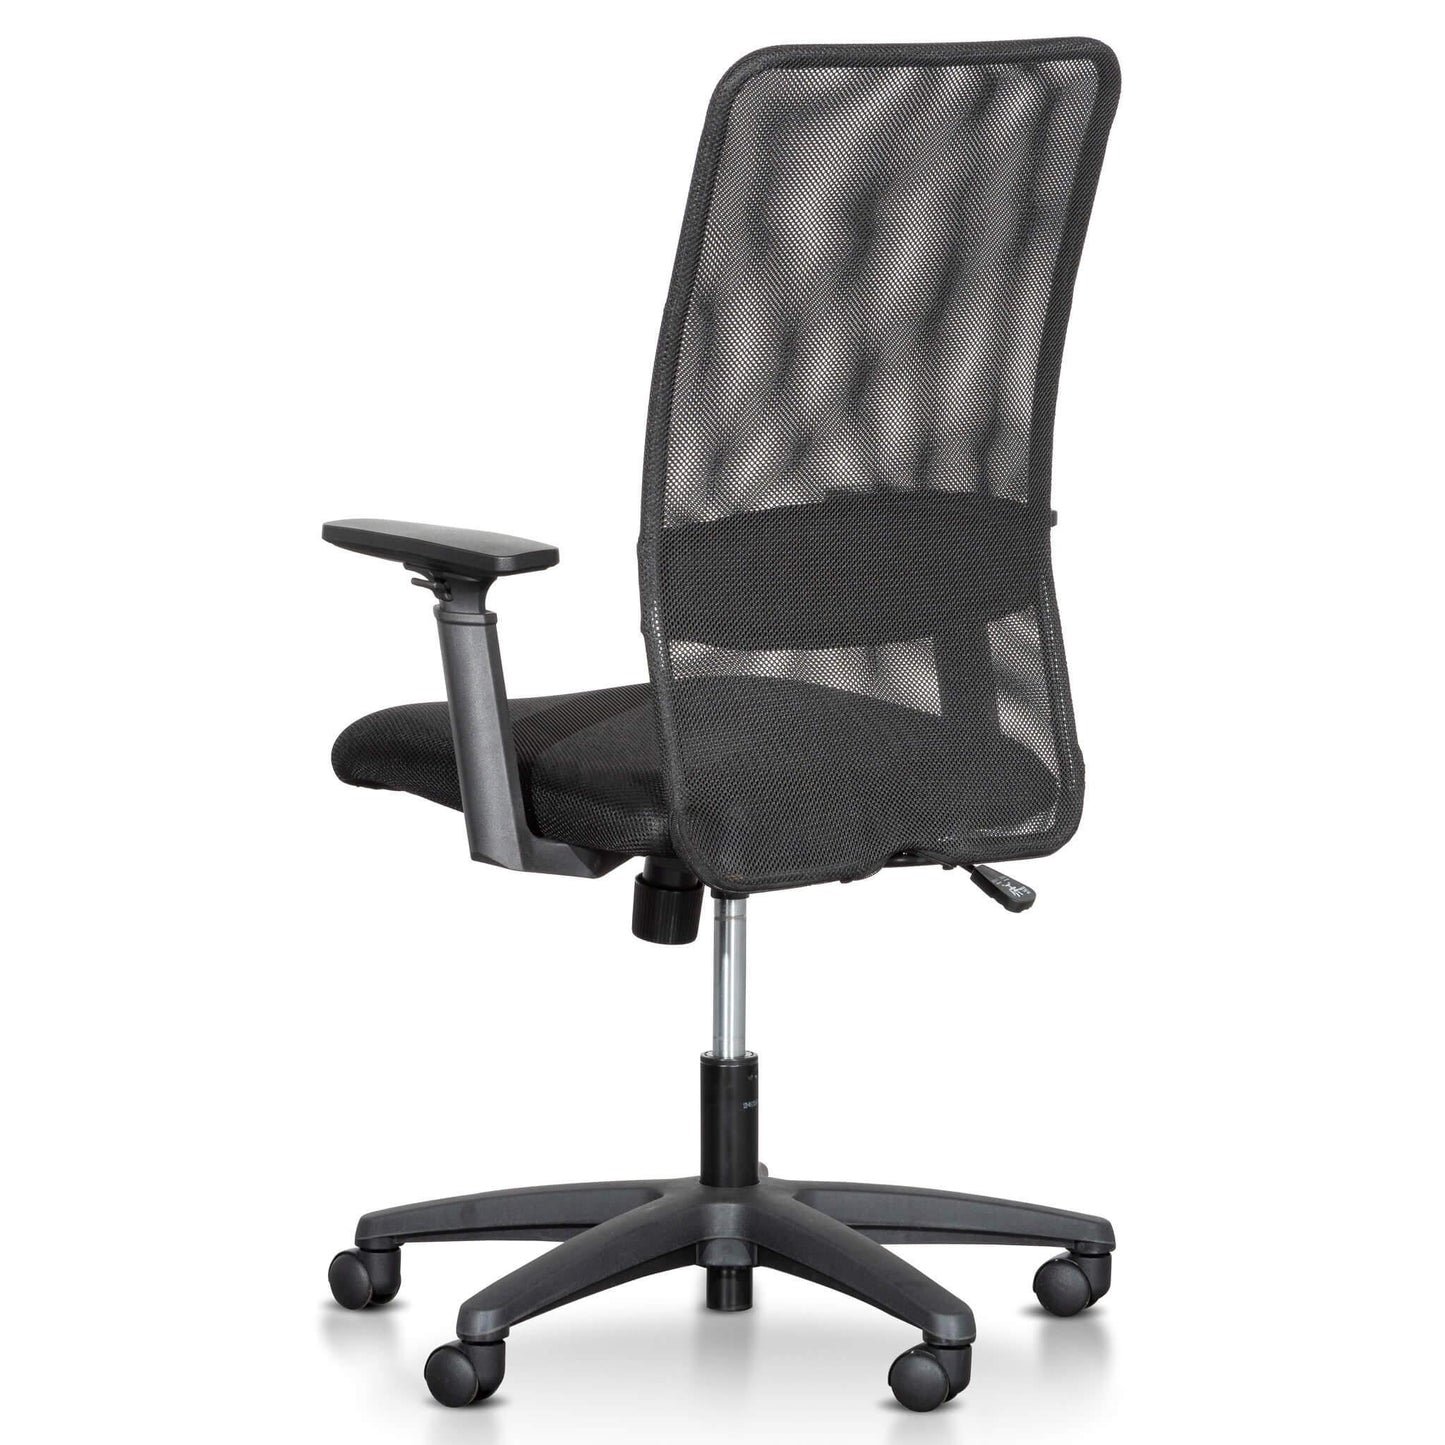 Calibre Mesh Office Chair - Black OC6240-UN - Office/Gaming ChairsOC6240-UN 4